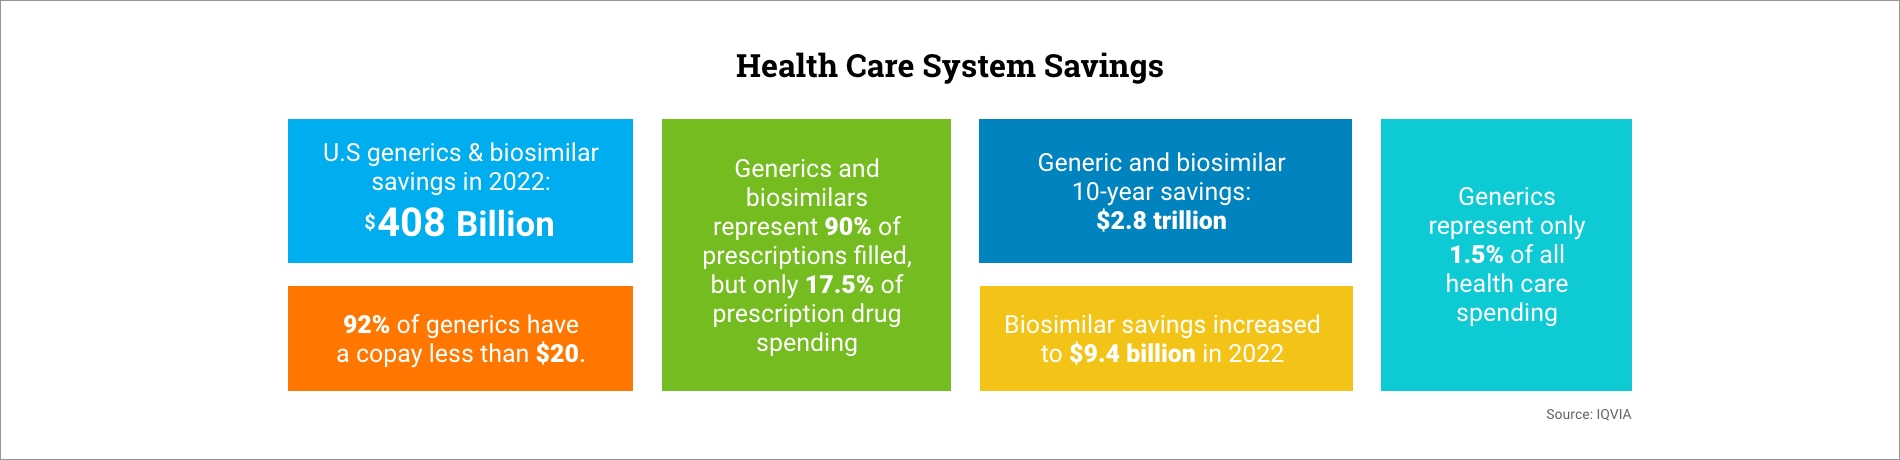 2021 U.S. Healthcare system savings